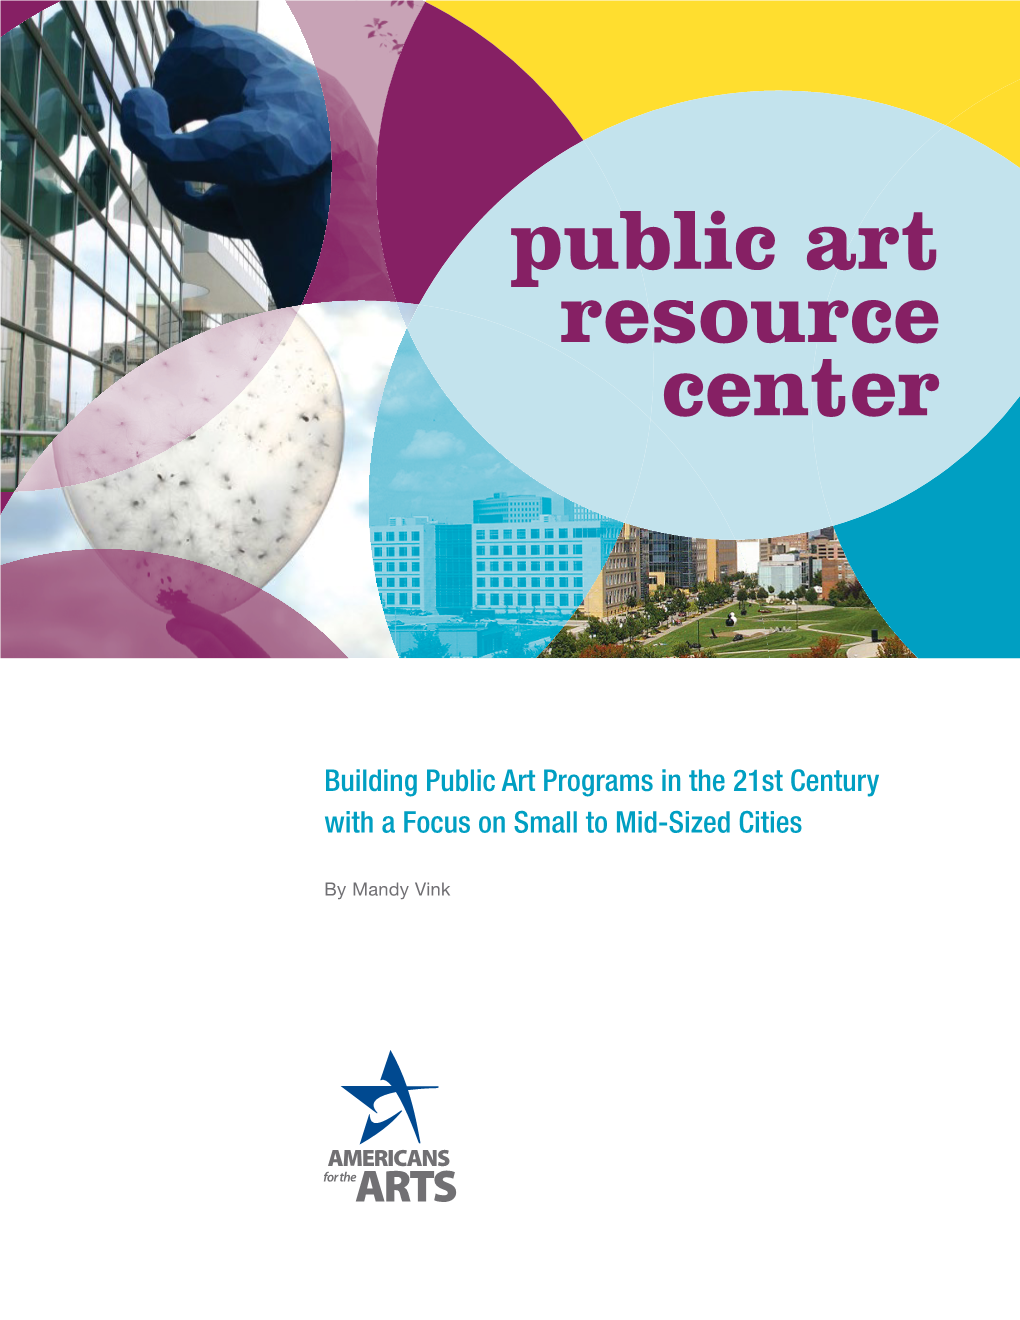 Public Art Resource Center